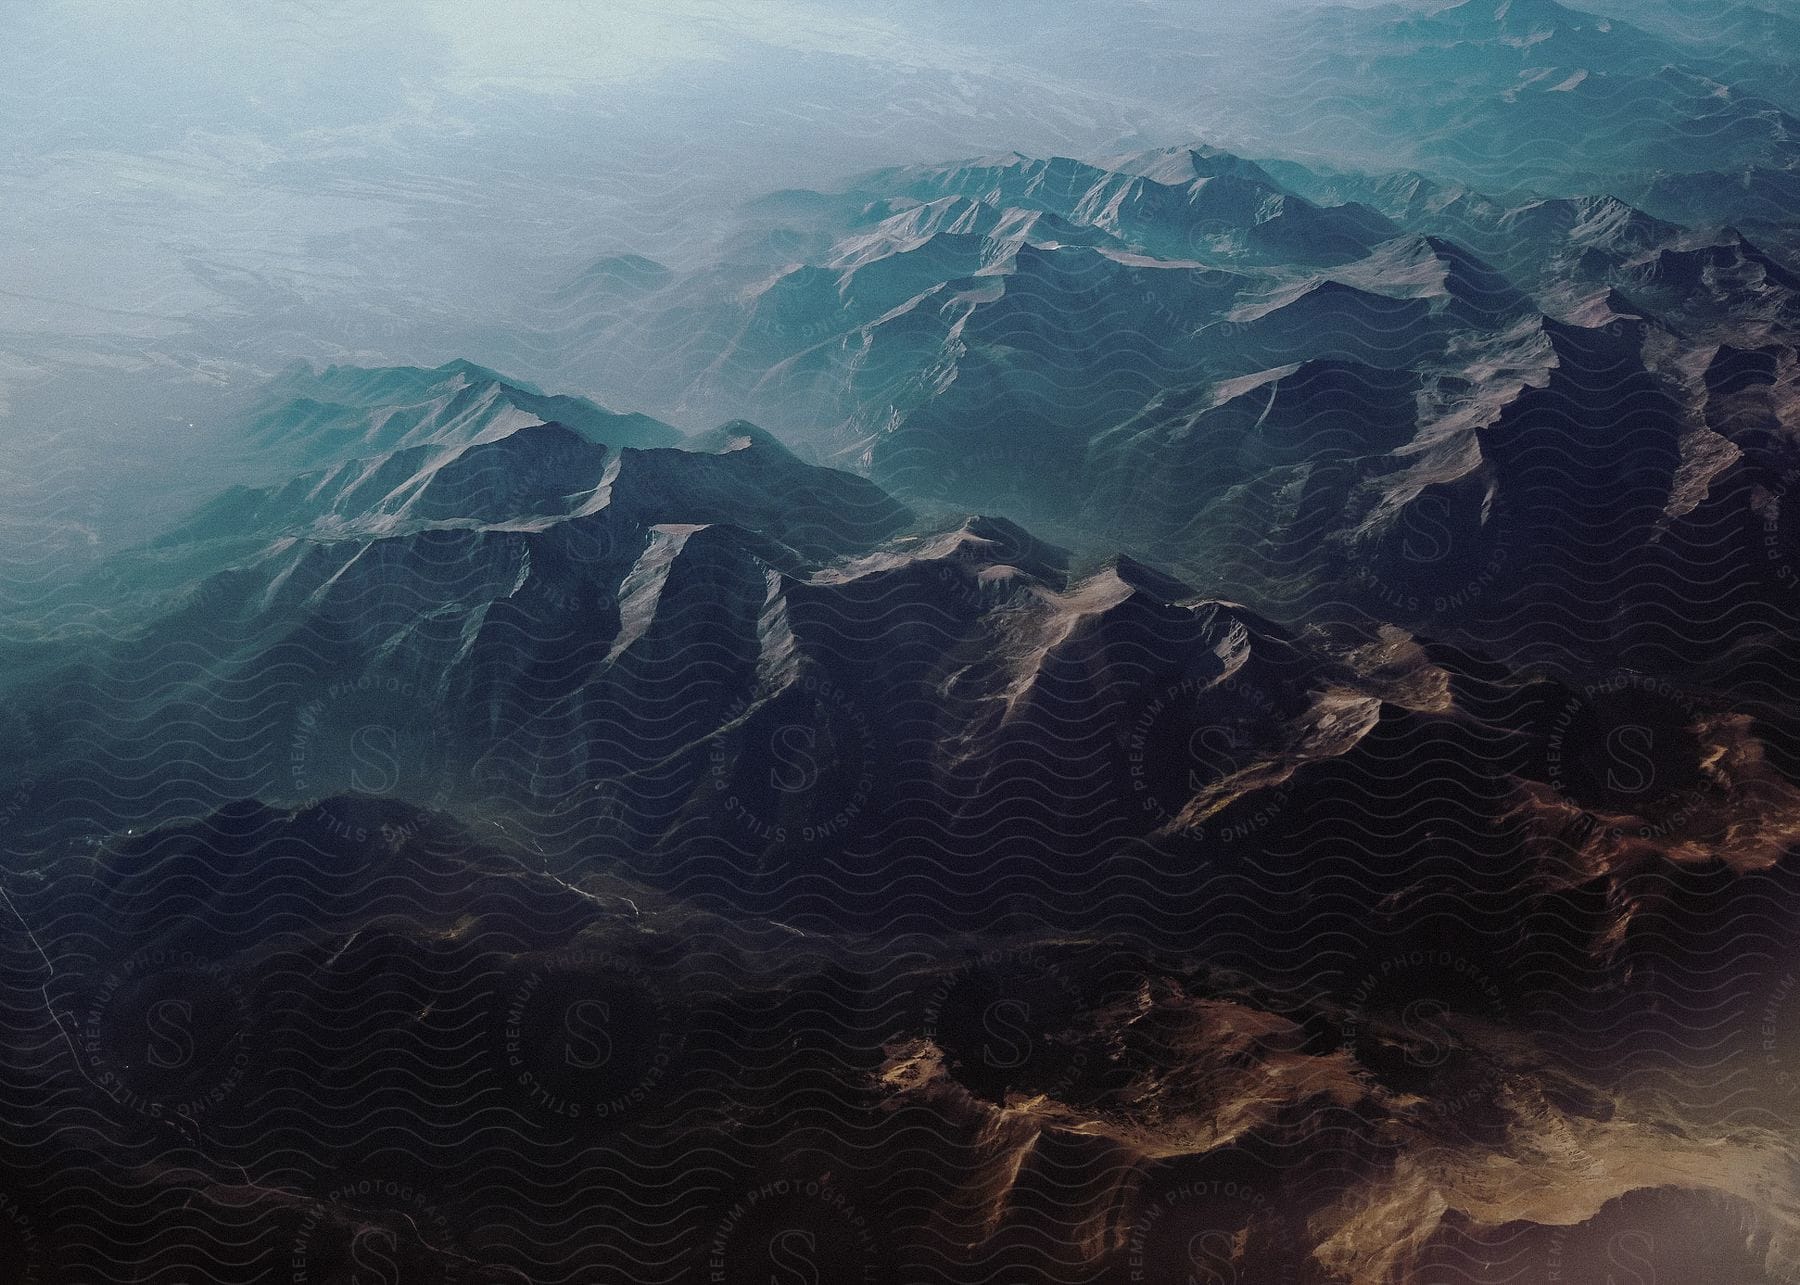 Barren mountain range seen from above